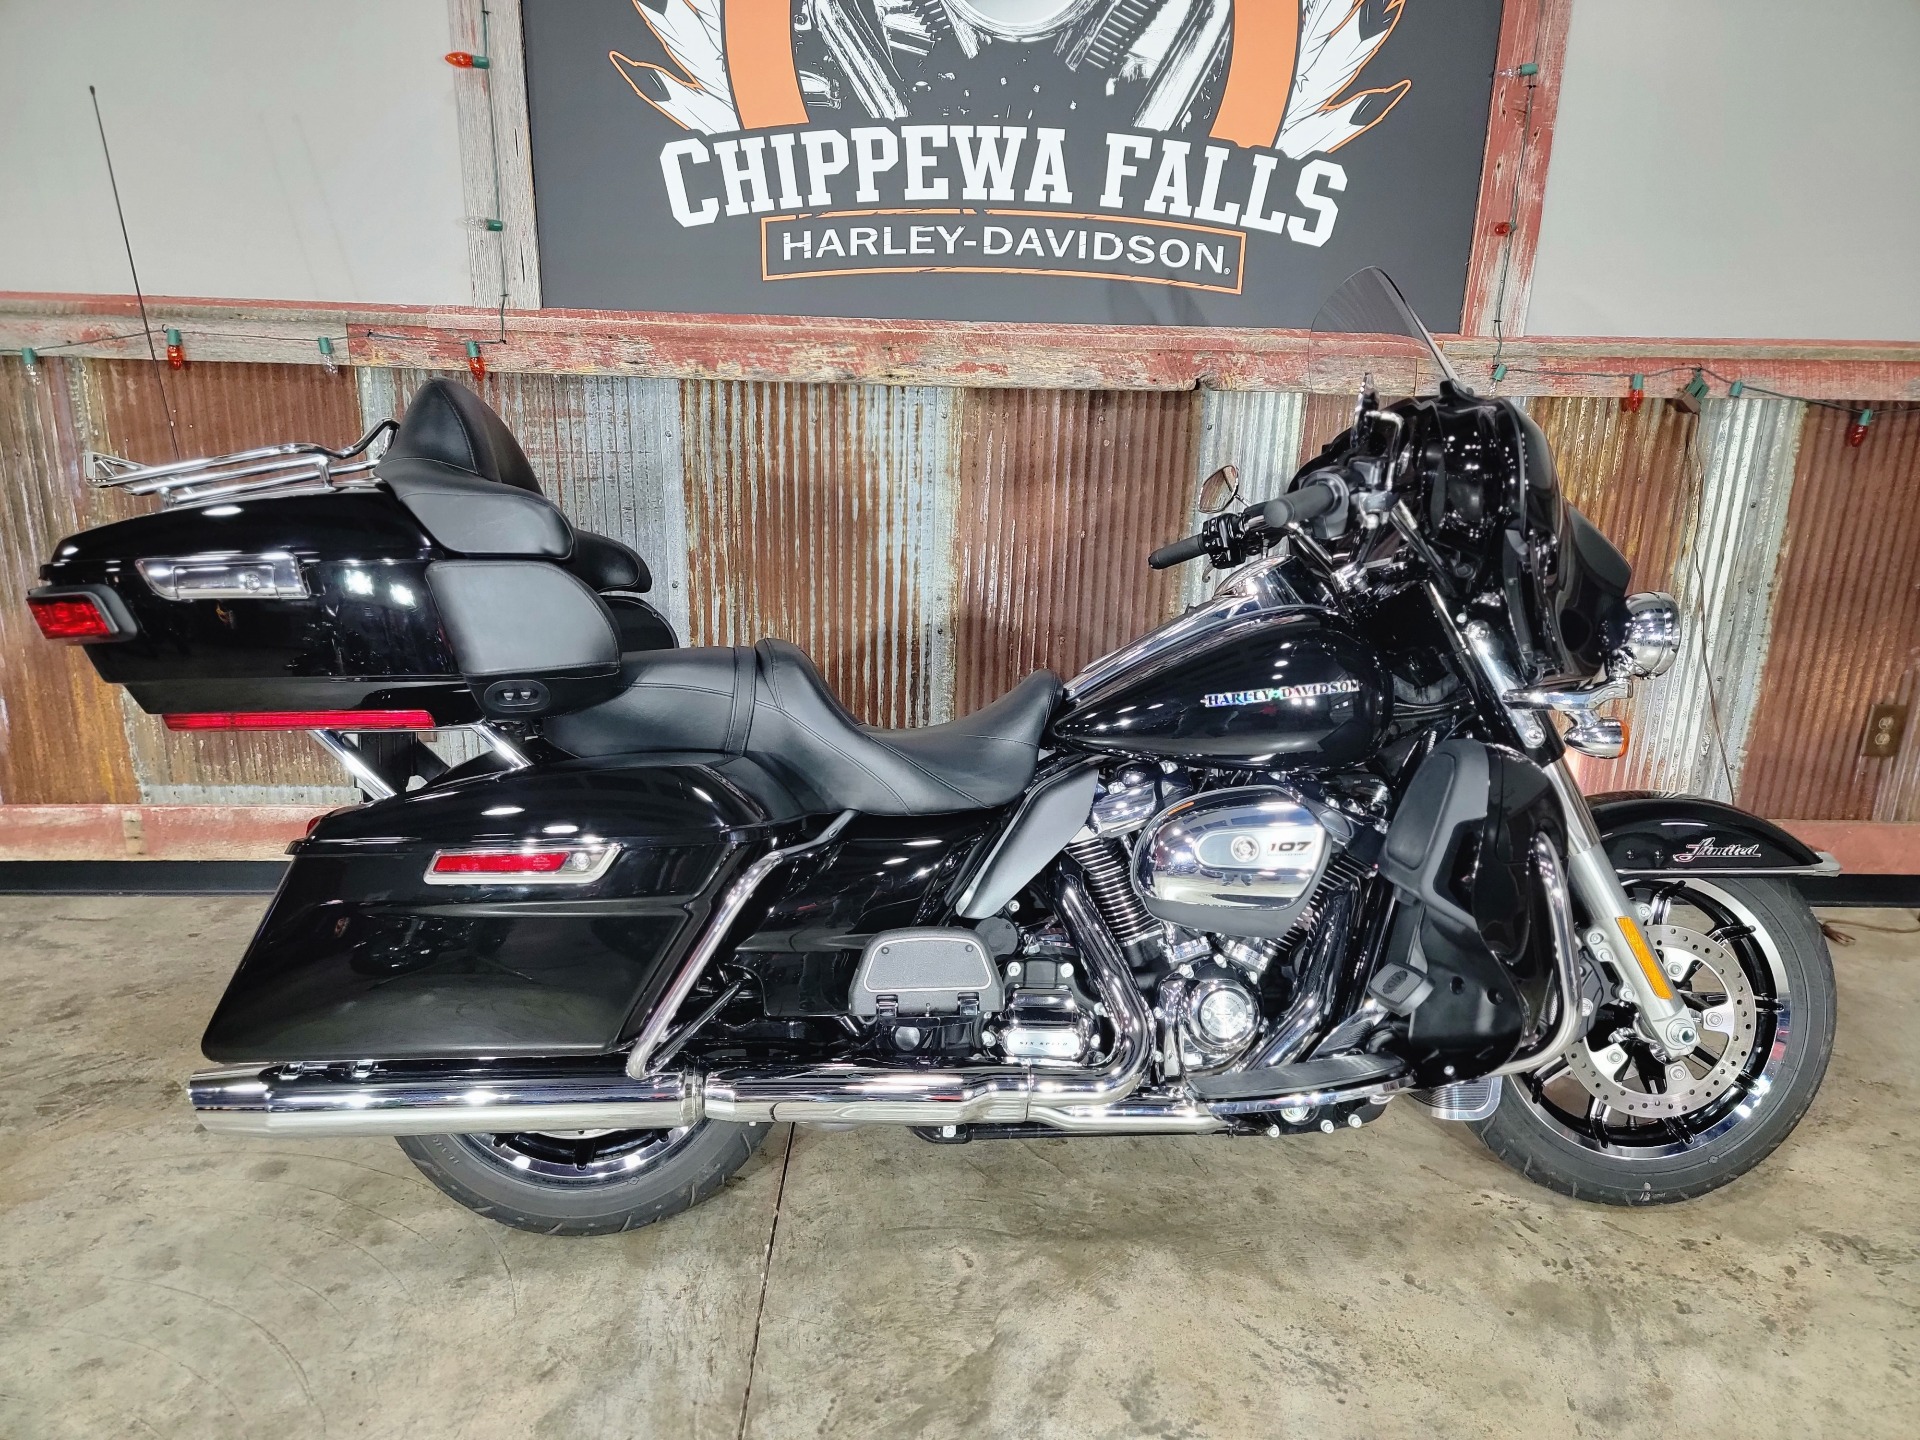 2018 Harley-Davidson Ultra Limited in Chippewa Falls, Wisconsin - Photo 1